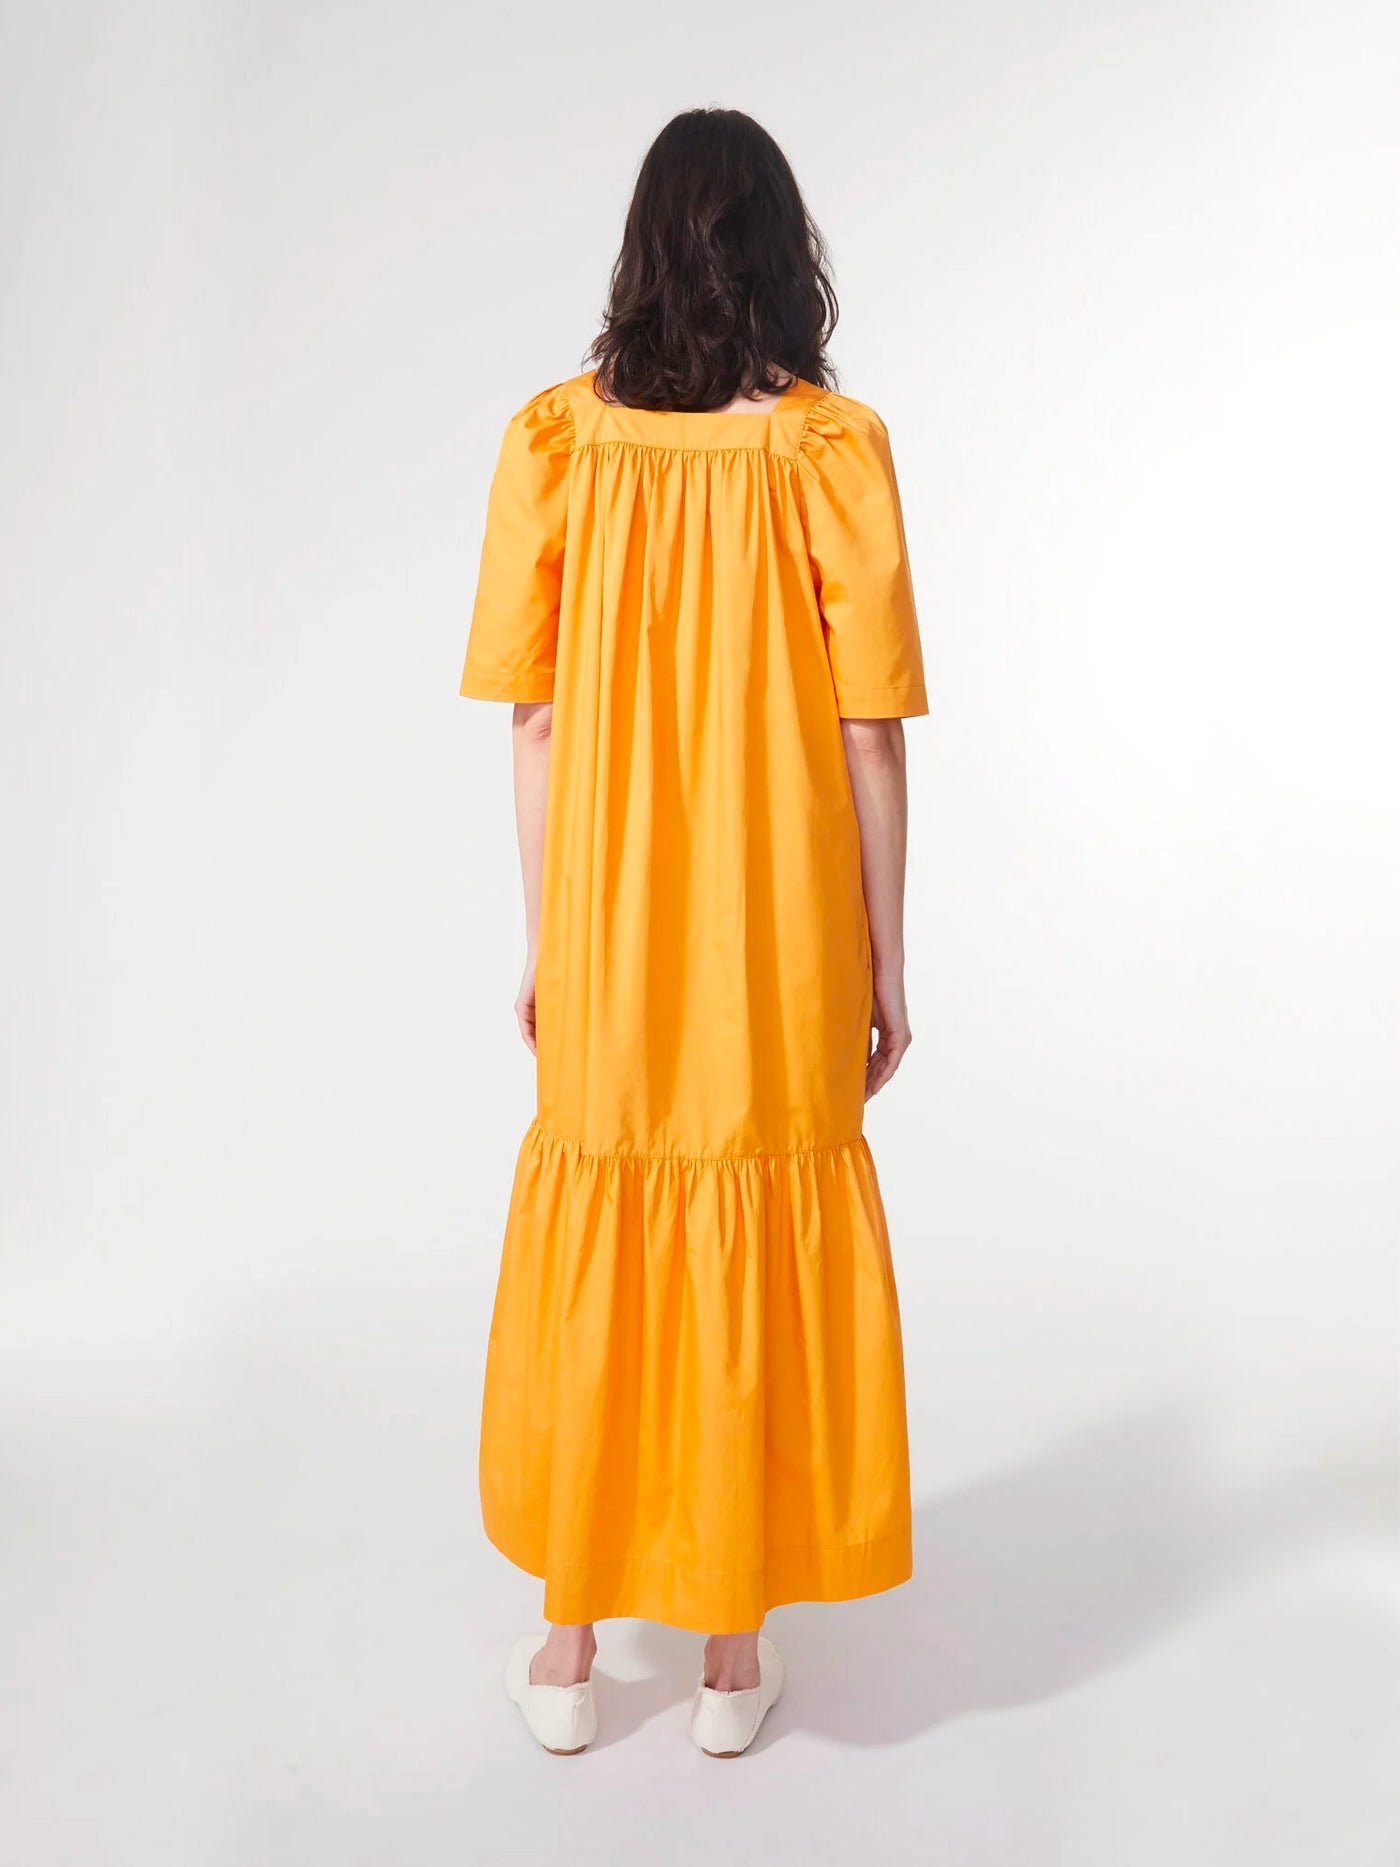 Donya dress, orange